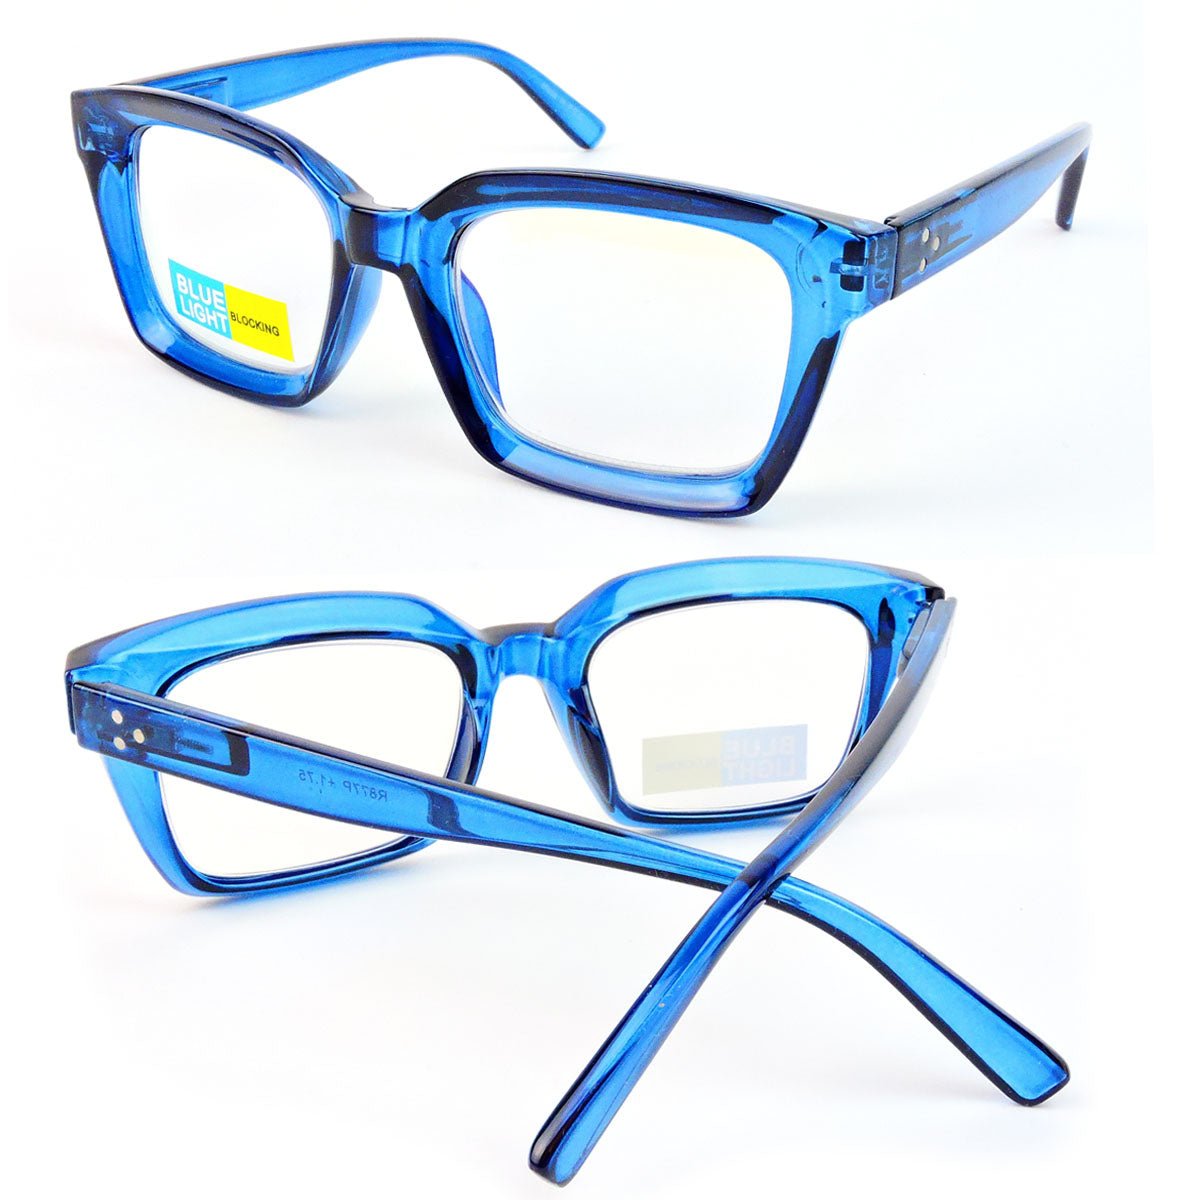 Blue Light Blocking Glasses Thick Rectangle Preppy Look - Reading Glasses - Blue, +1.50